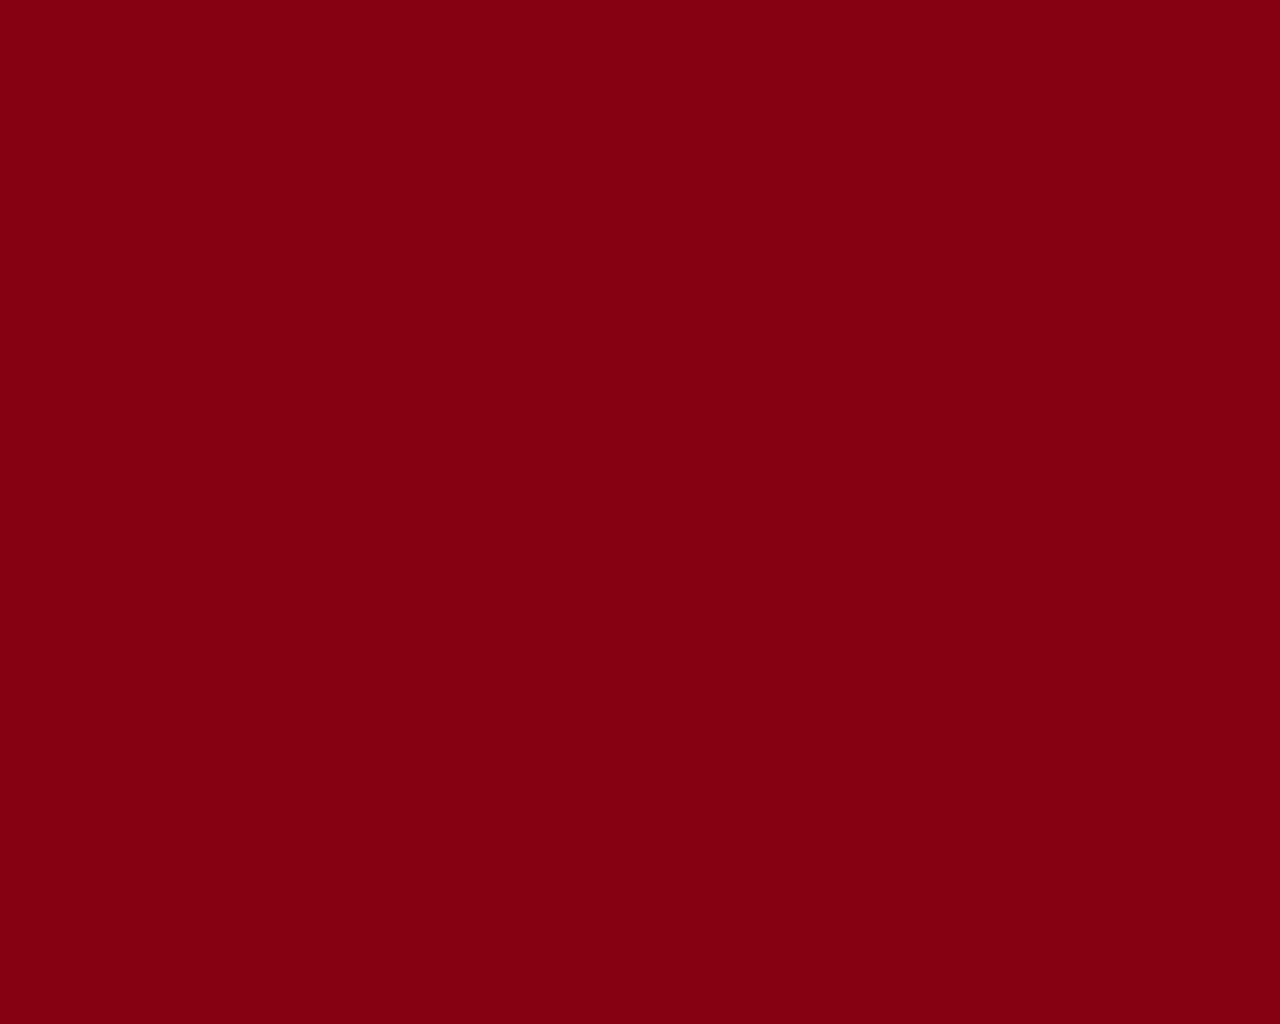 1280x1024 Red Devil Solid Color Background